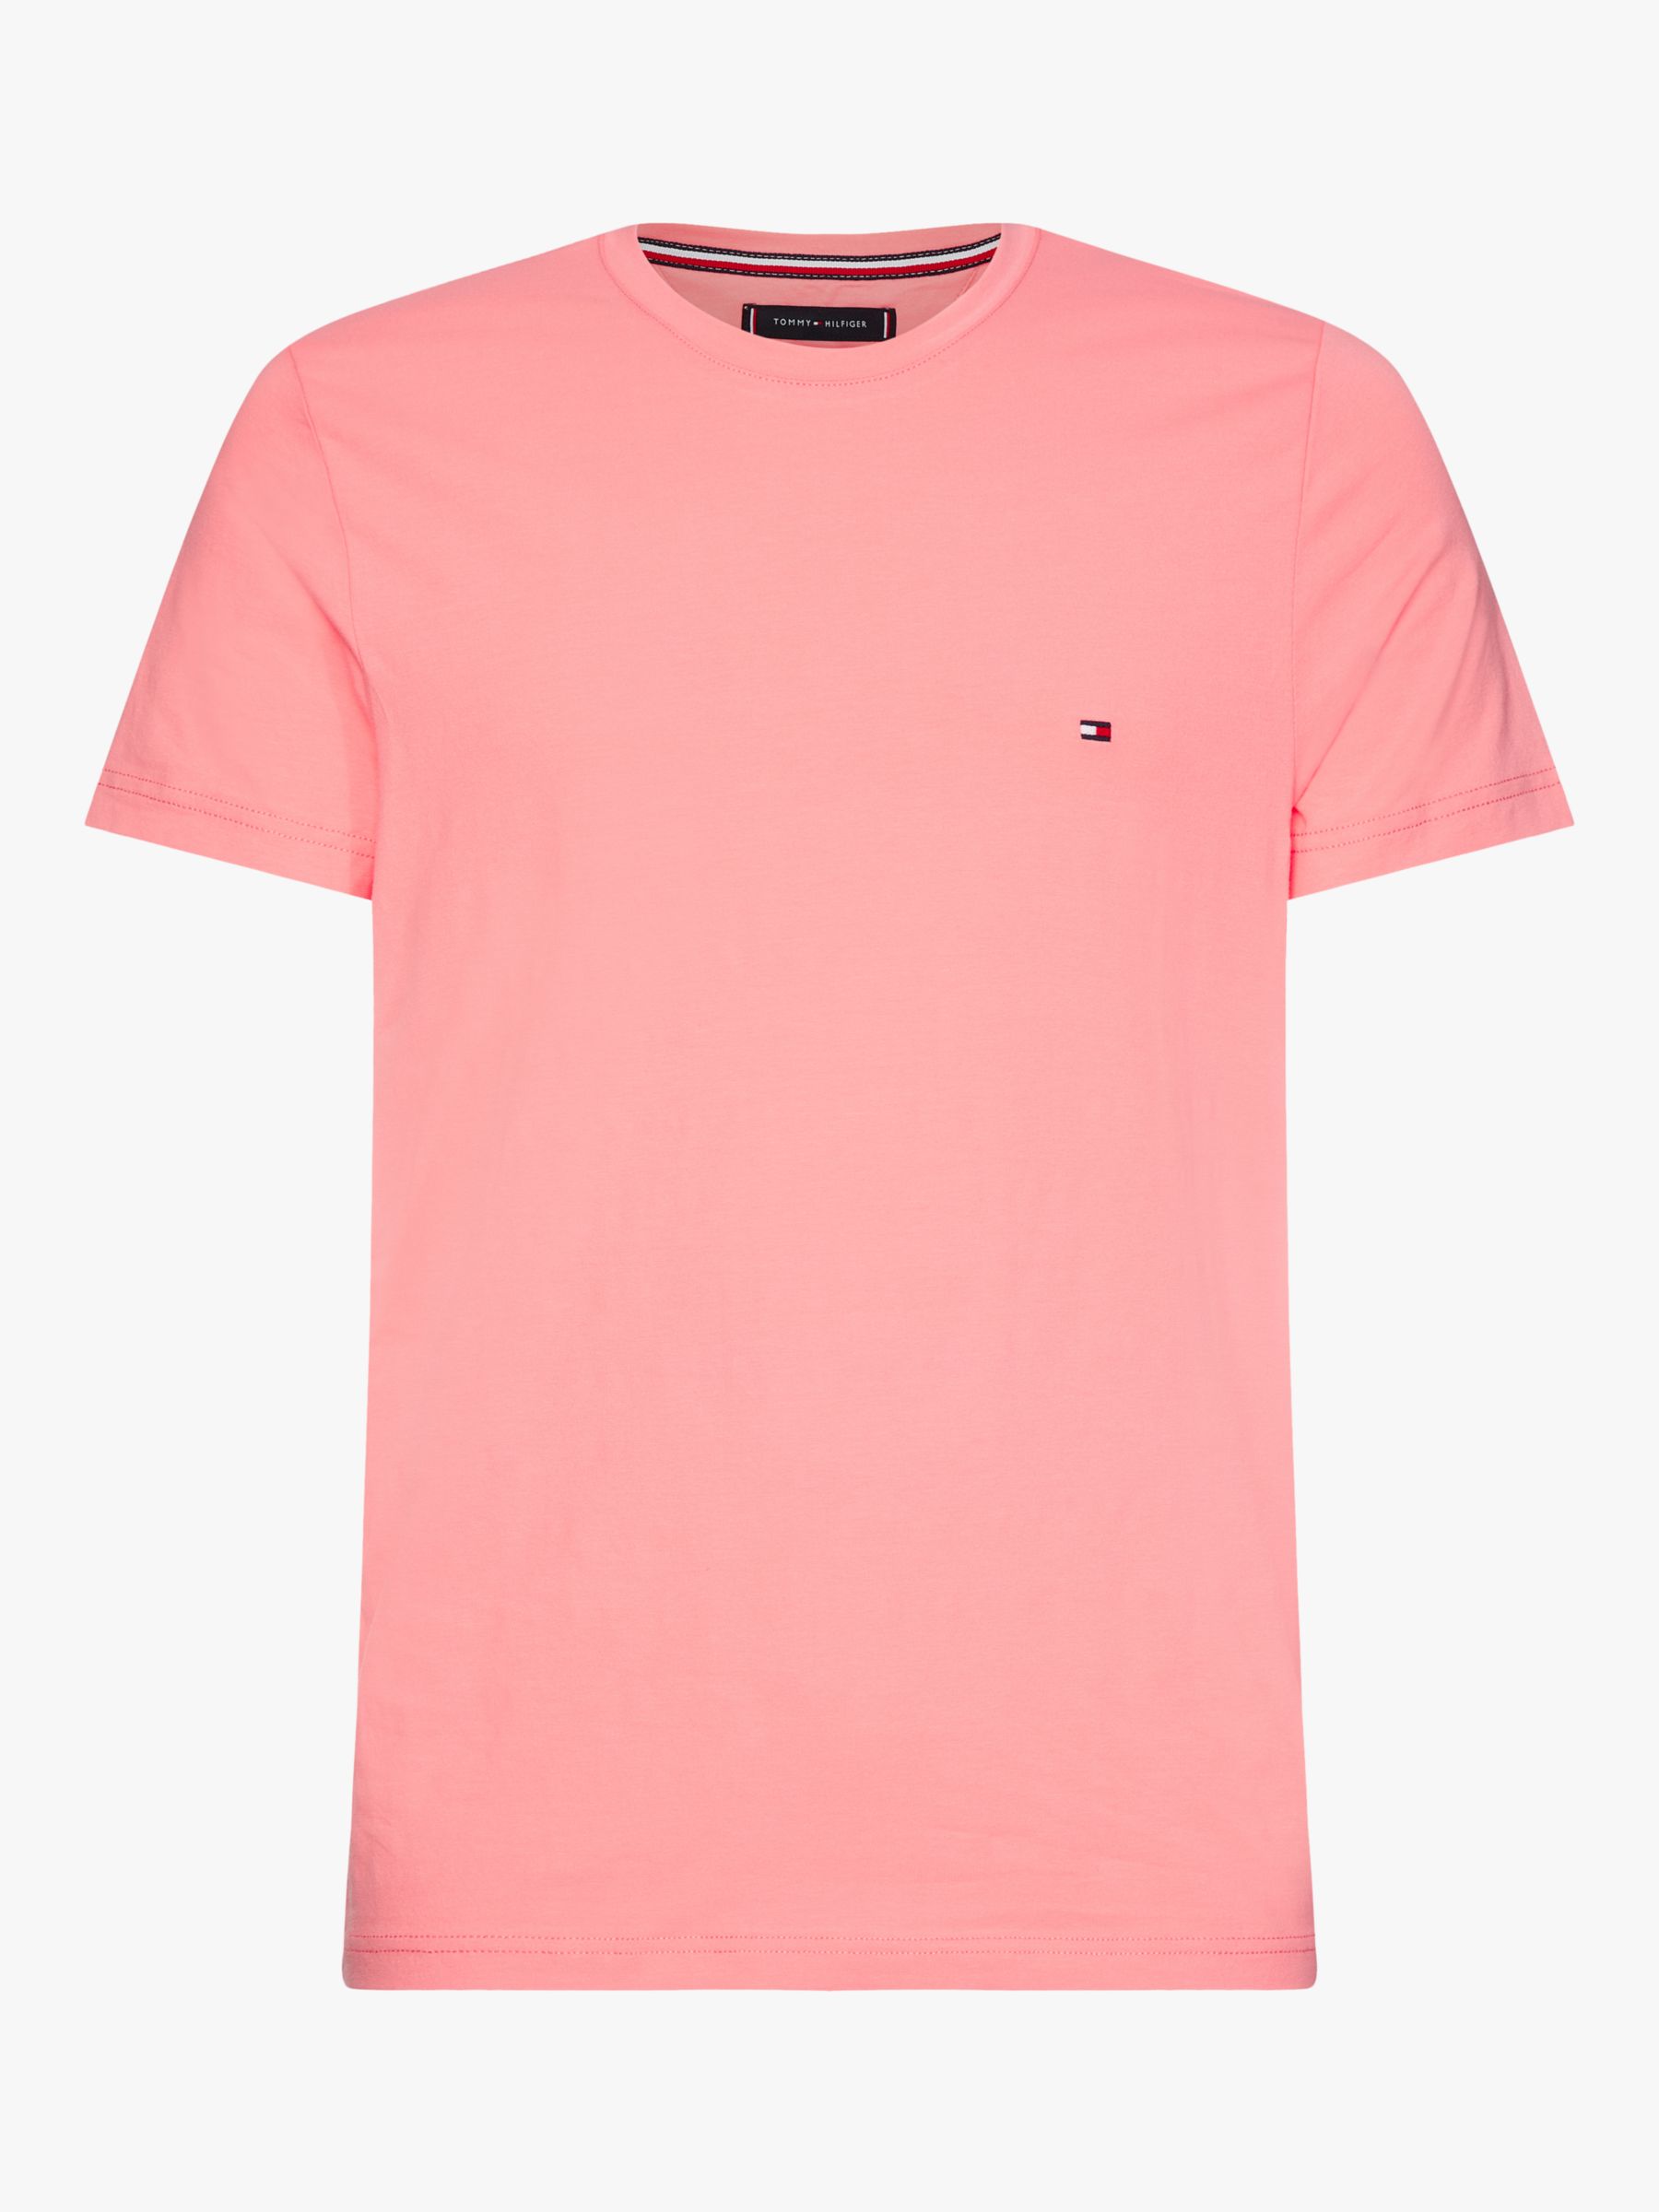 Tommy Hilfiger Stretch Cotton T-Shirt, Grapefruit